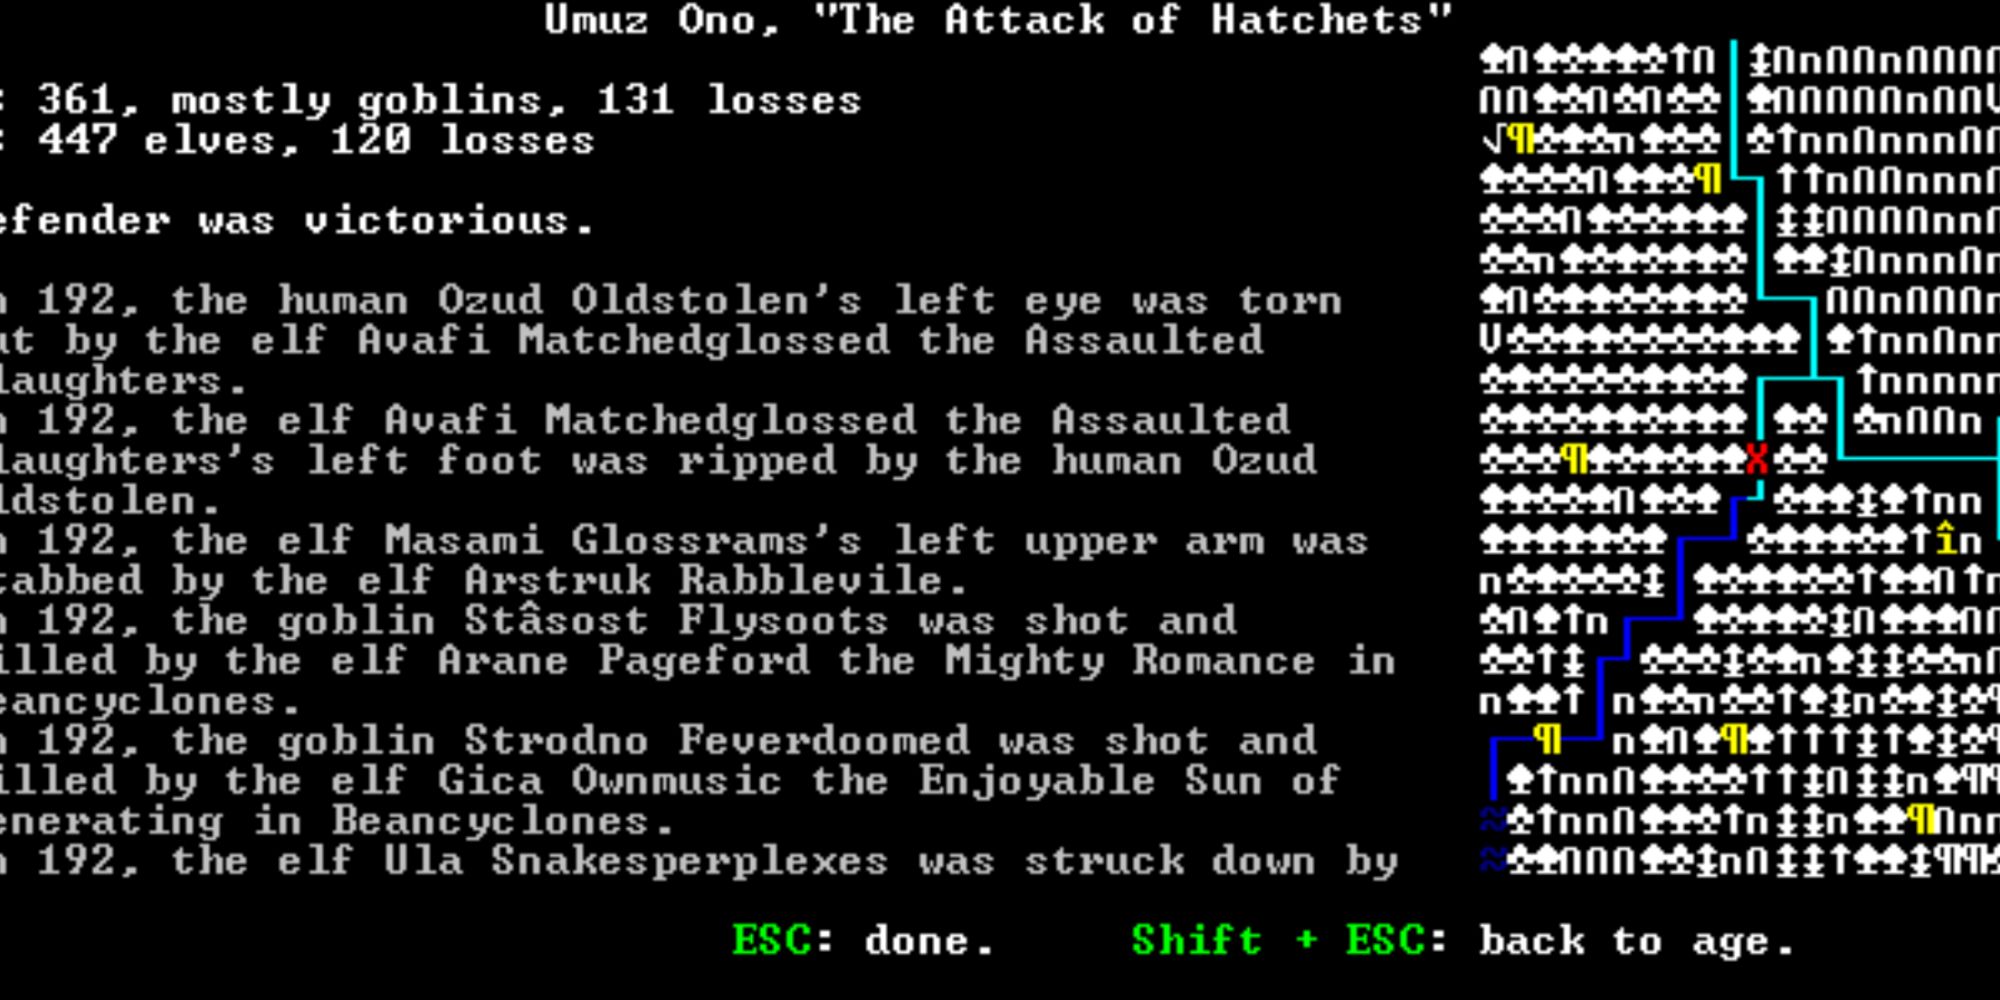 dwarf fortress legends mode description of the "attack of hatchets"